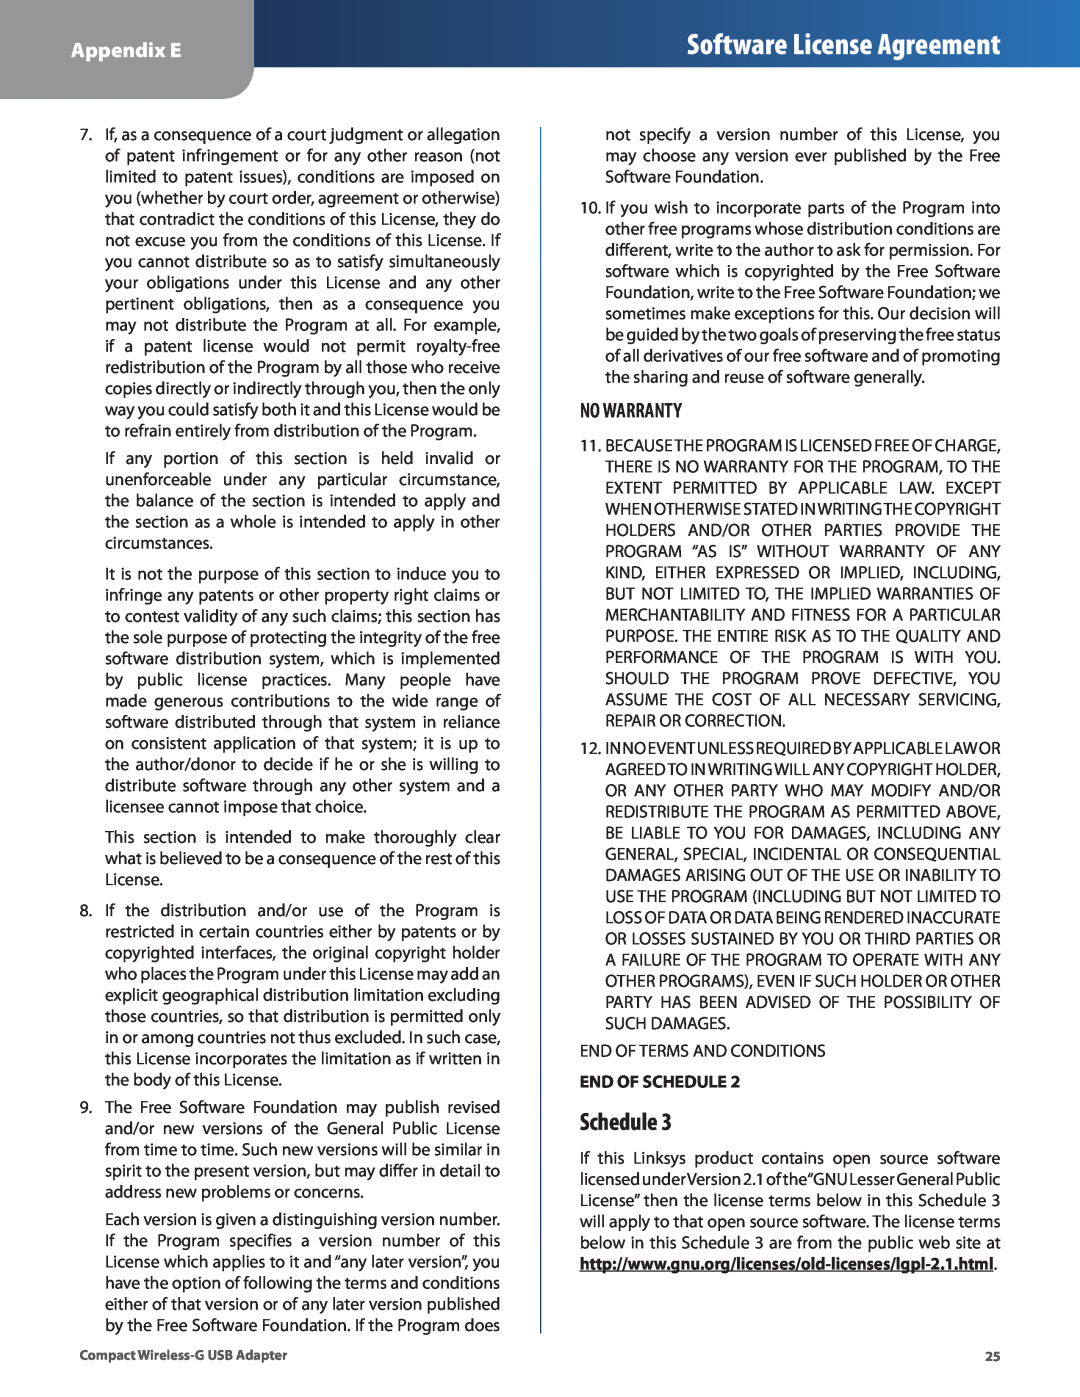 Cisco Systems WUSB54GC manual No Warranty, Software License Agreement, Schedule, Appendix E 